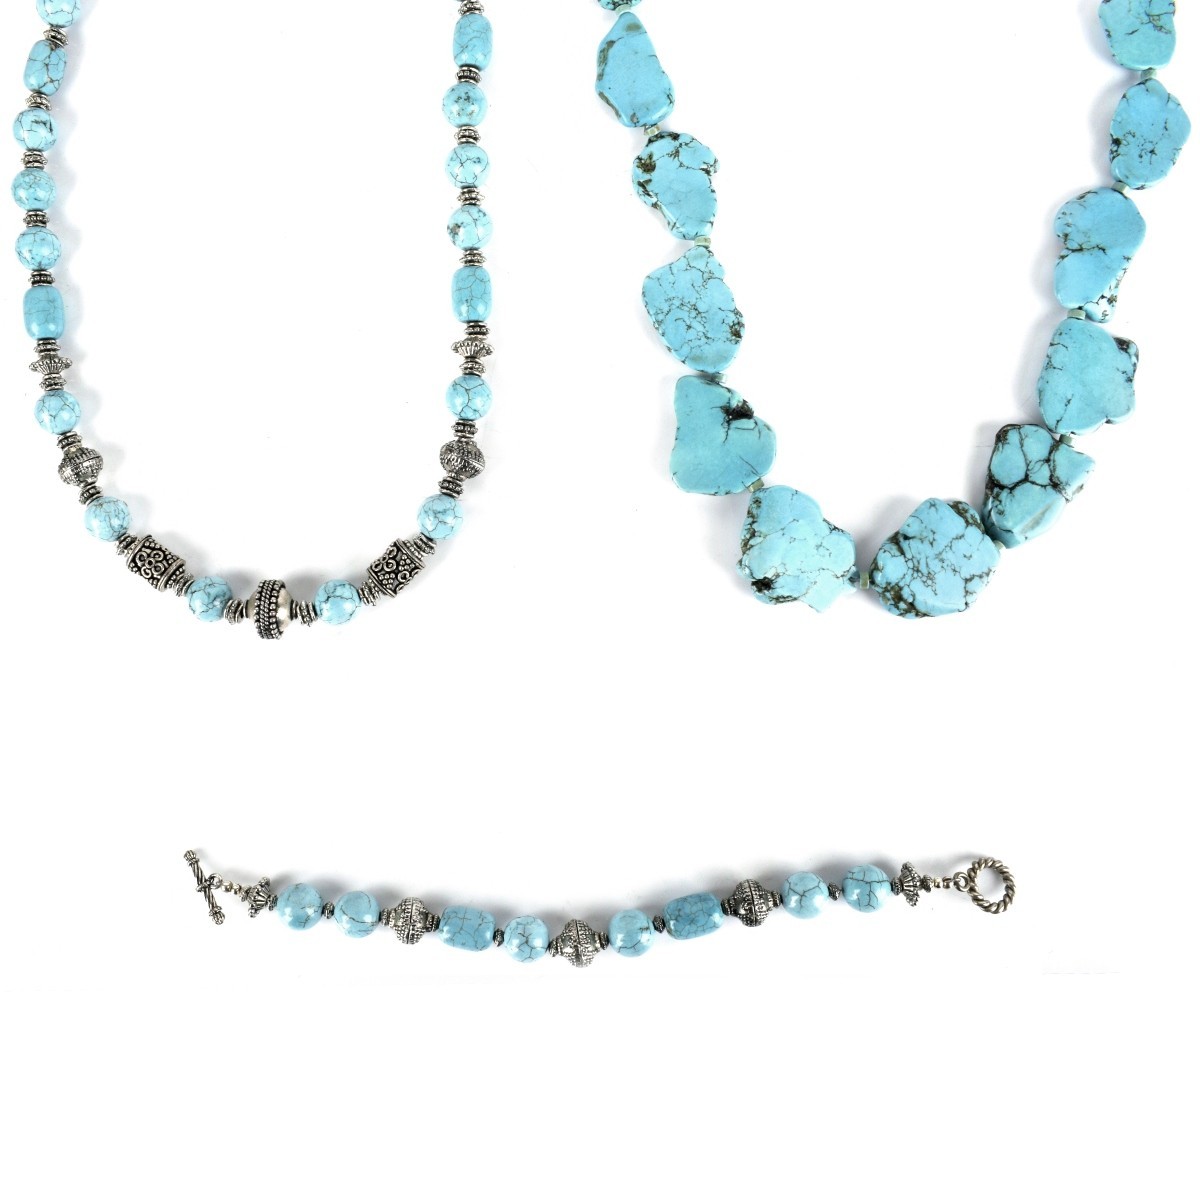 Three Pieces Turquoise Beaded Jewelry Items